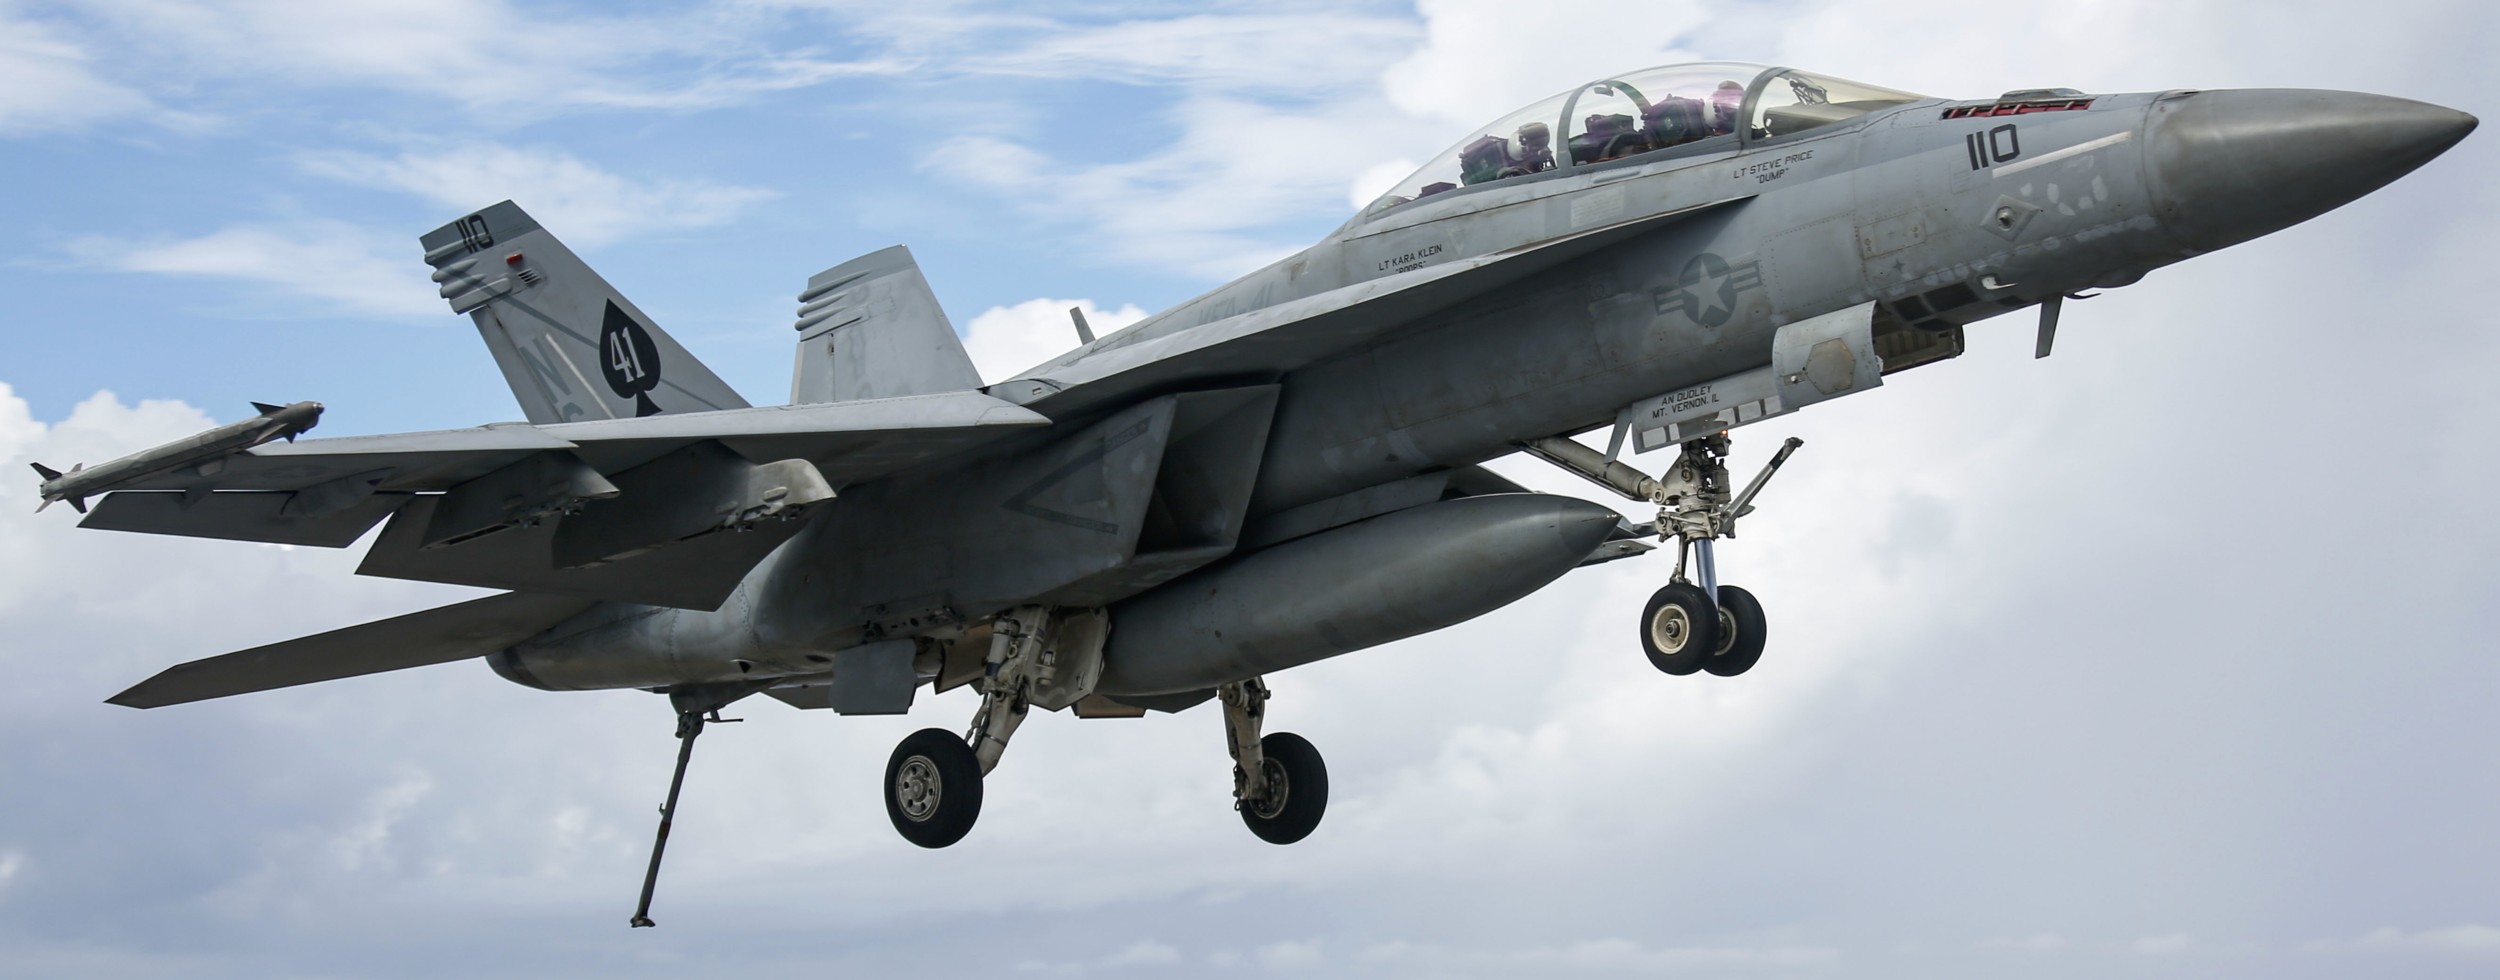 vfa-41 black aces strike fighter squadron f/a-18f super hornet cvw-9 cvn-72 uss abraham lincoln us navy 100